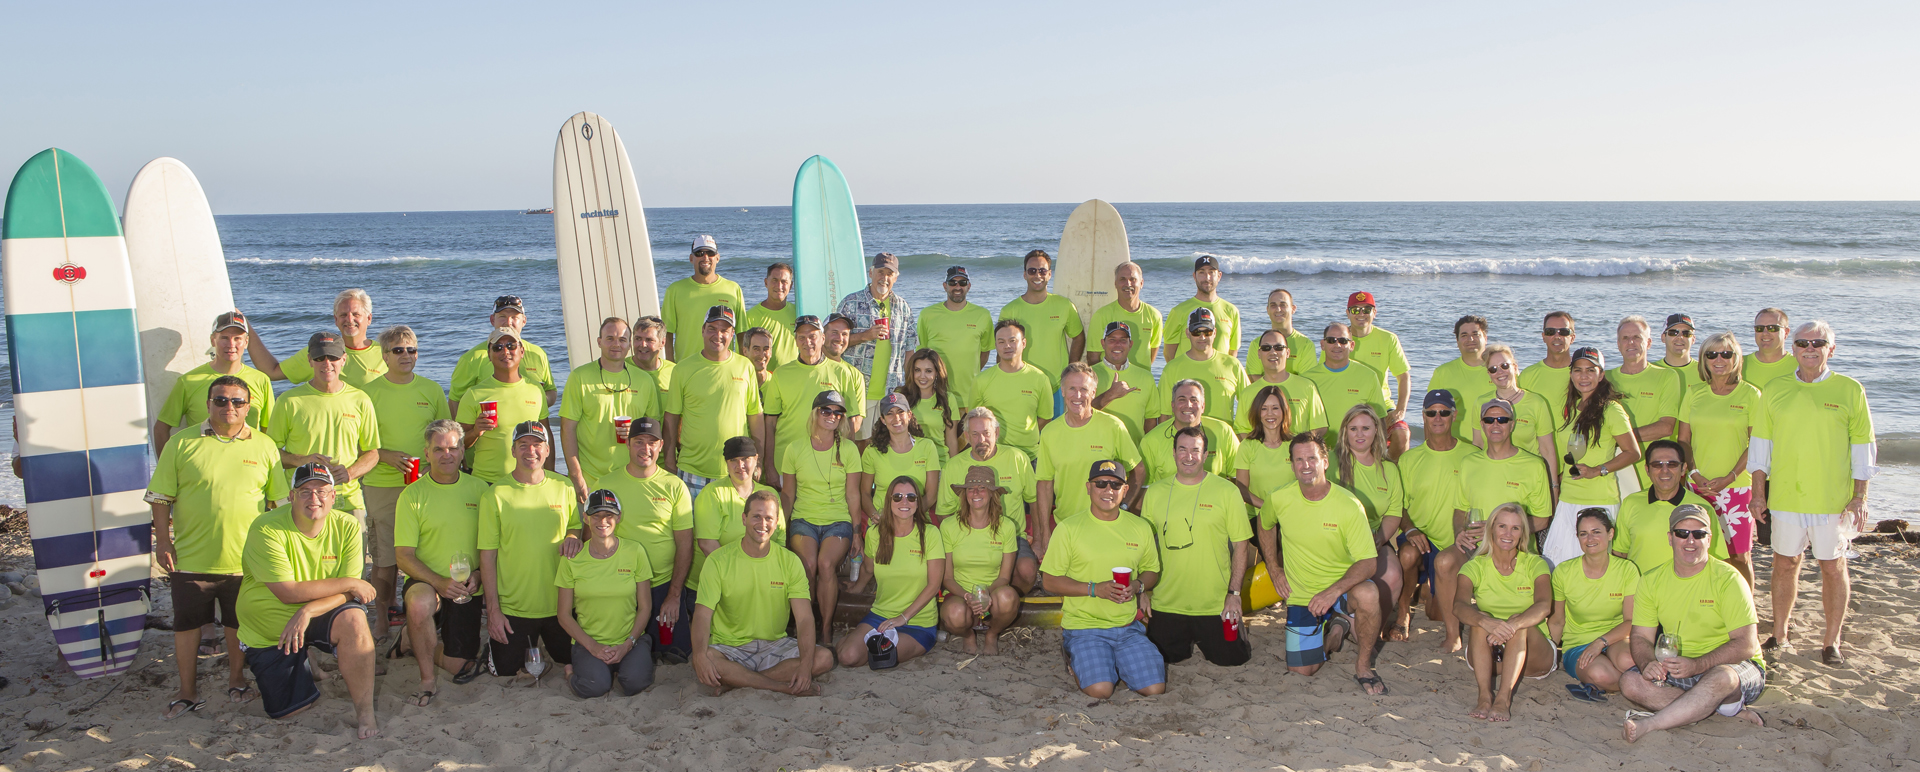 2014 Surf Camp 2